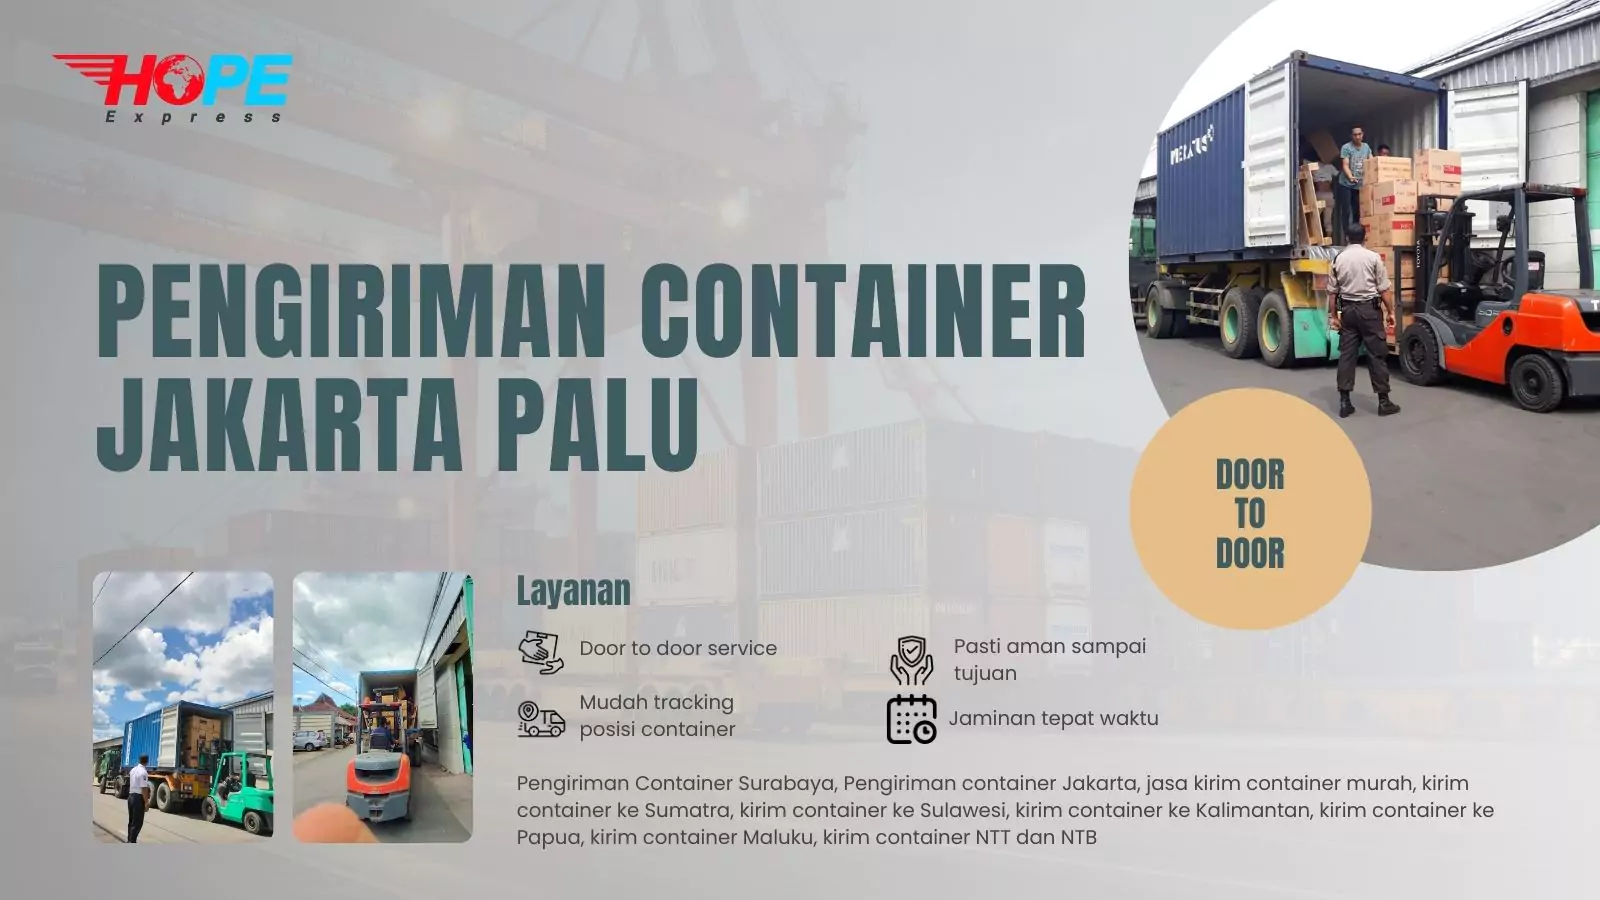 Pengiriman Container Jakarta Palu